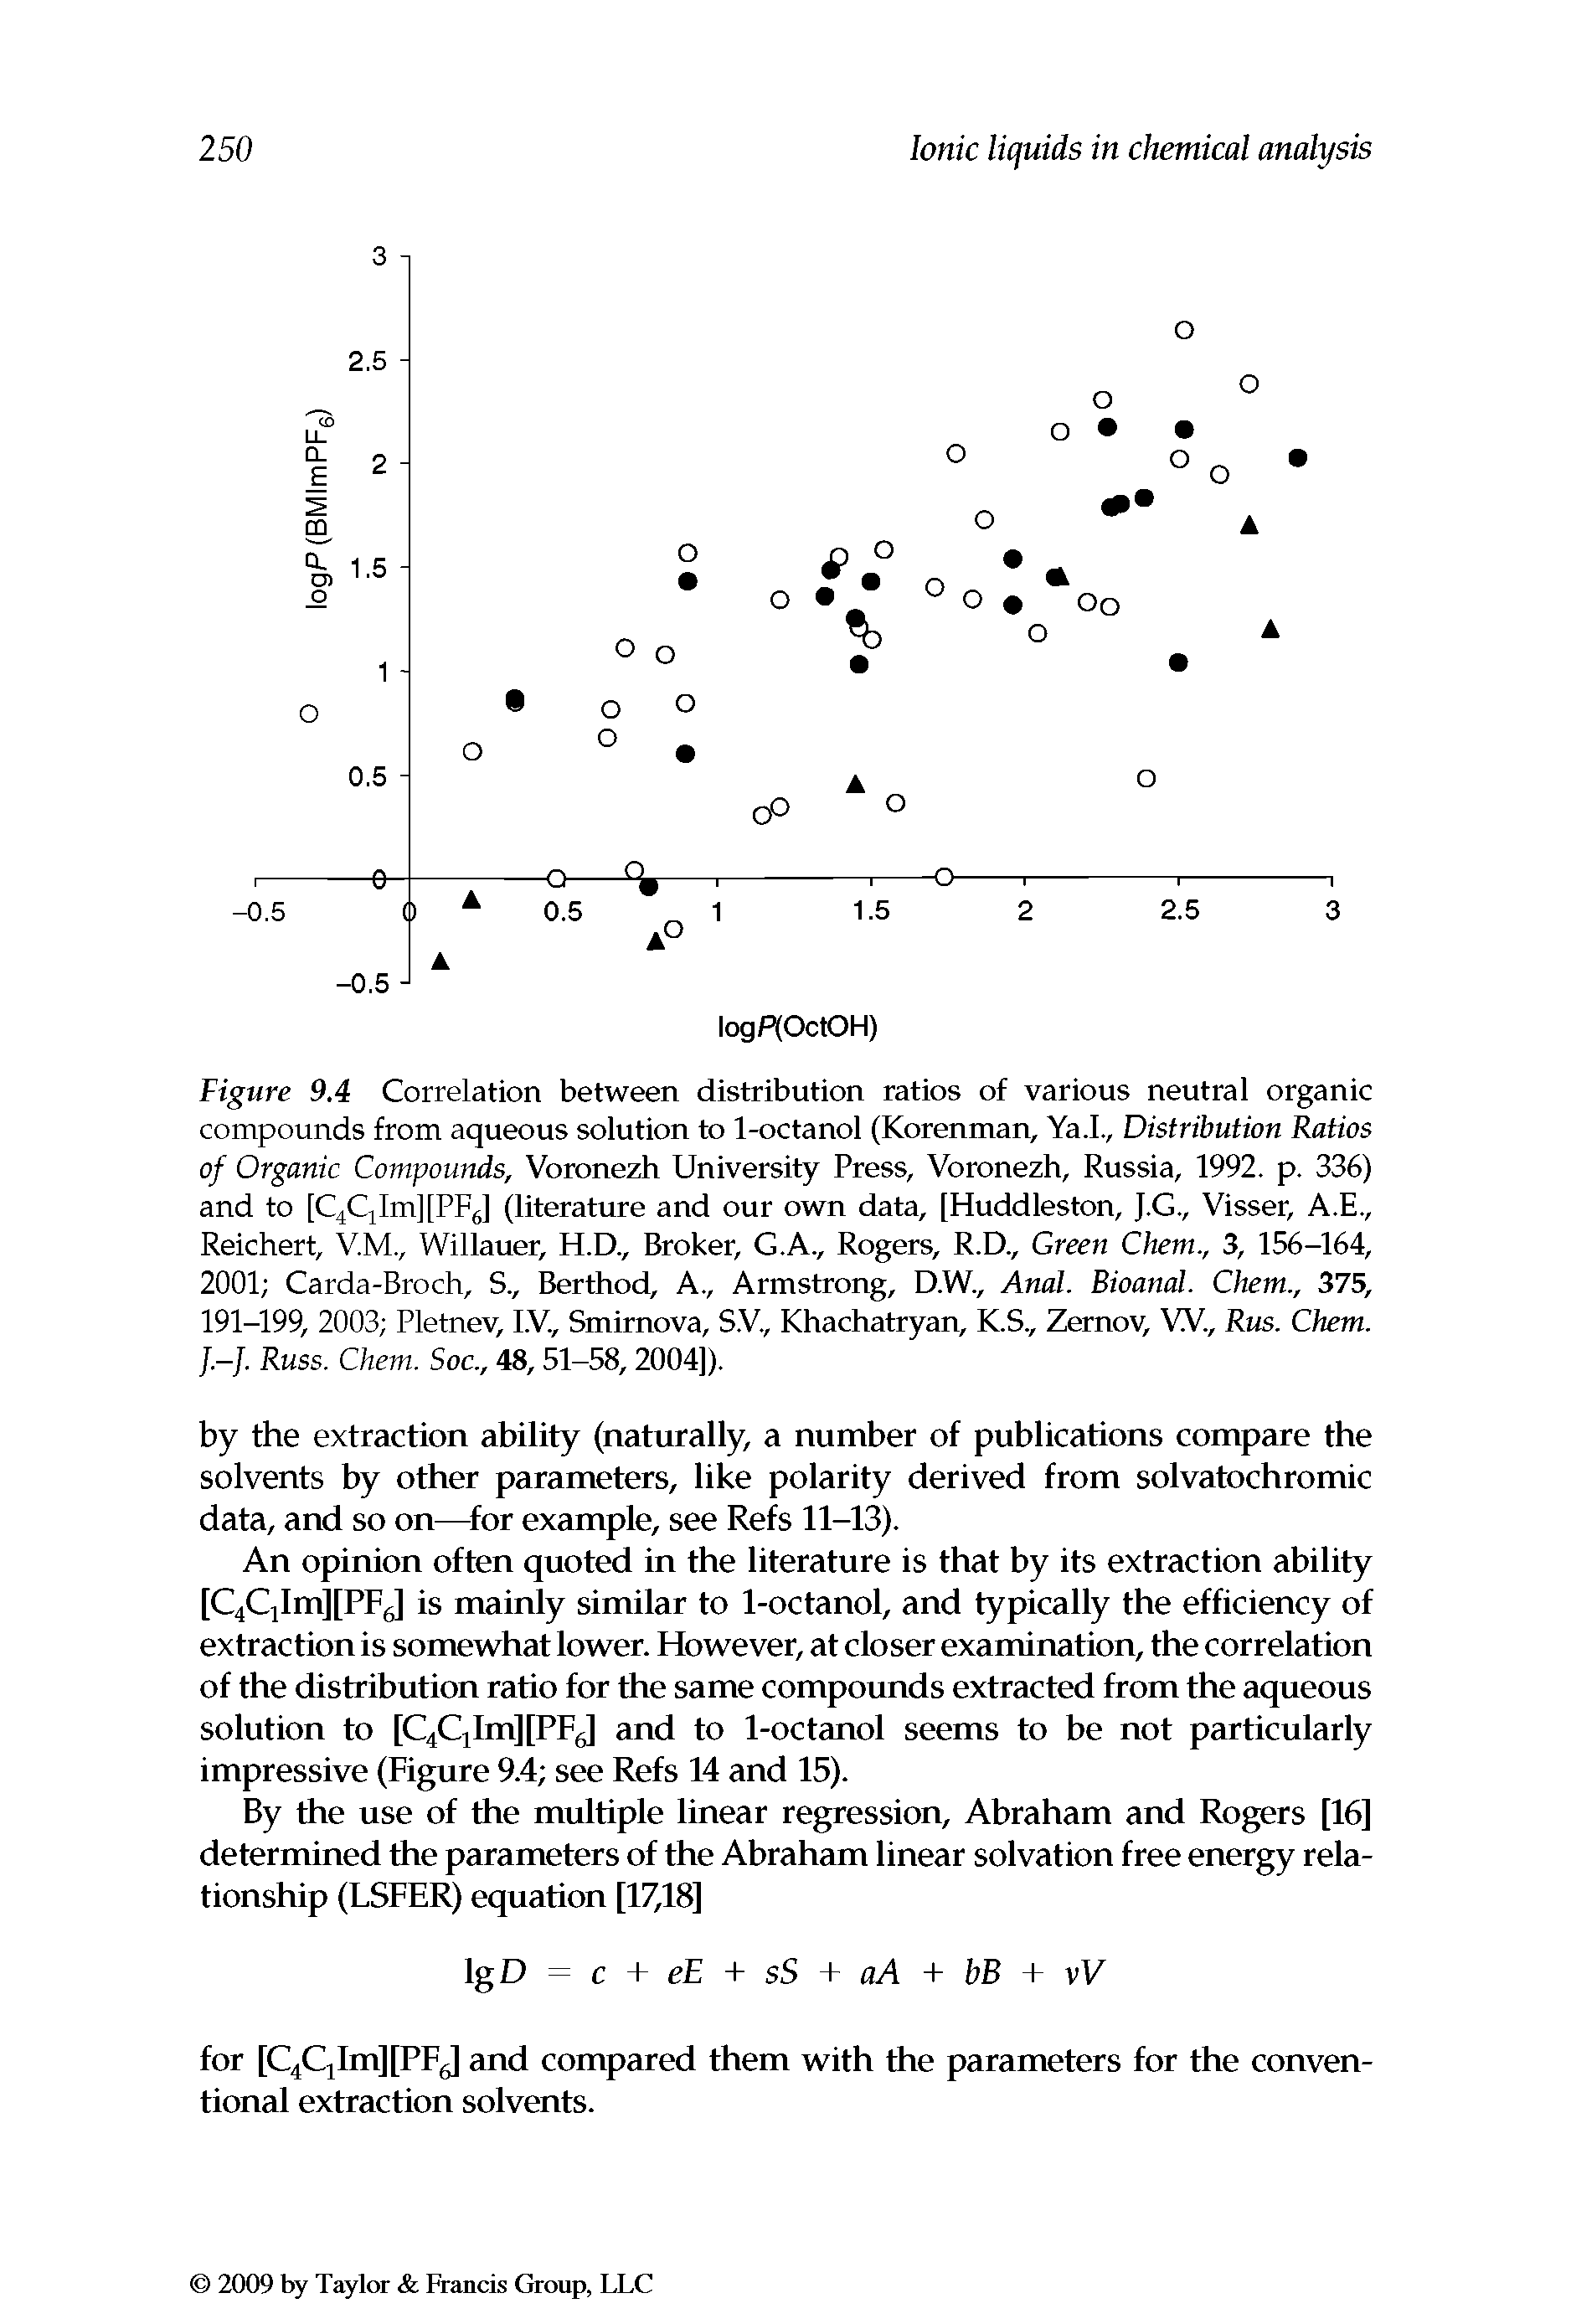 Figure 9.4 Correlation between distribution ratios of various neutral organic compounds from aqueous solution to 1-octanol (Korenman, Ya.L, Distribution Ratios of Organic Compounds, Voronezh University Press, Voronezh, Russia, 1992. p. 336) and to [C4CjIm][Pp5] (literature and our own data, [Huddleston, J.G., Visser, A.E., Reichert, V.M., Willauer, H.D., Broker, G.A., Rogers, R.D., Green Chem., 3, 156-164, 2001 Carda-Broch, S., Berthod, A., Armstrong, D.W., Anal. Bioanal. Chem., 375, 191-199, 2003 Pletnev, l.V, Smirnova, S.V., Khachatryan, K.S., Zernov, W, Rus. Chem. /.-/. Russ. Chem. Soc., 48, 51-58, 2004]).